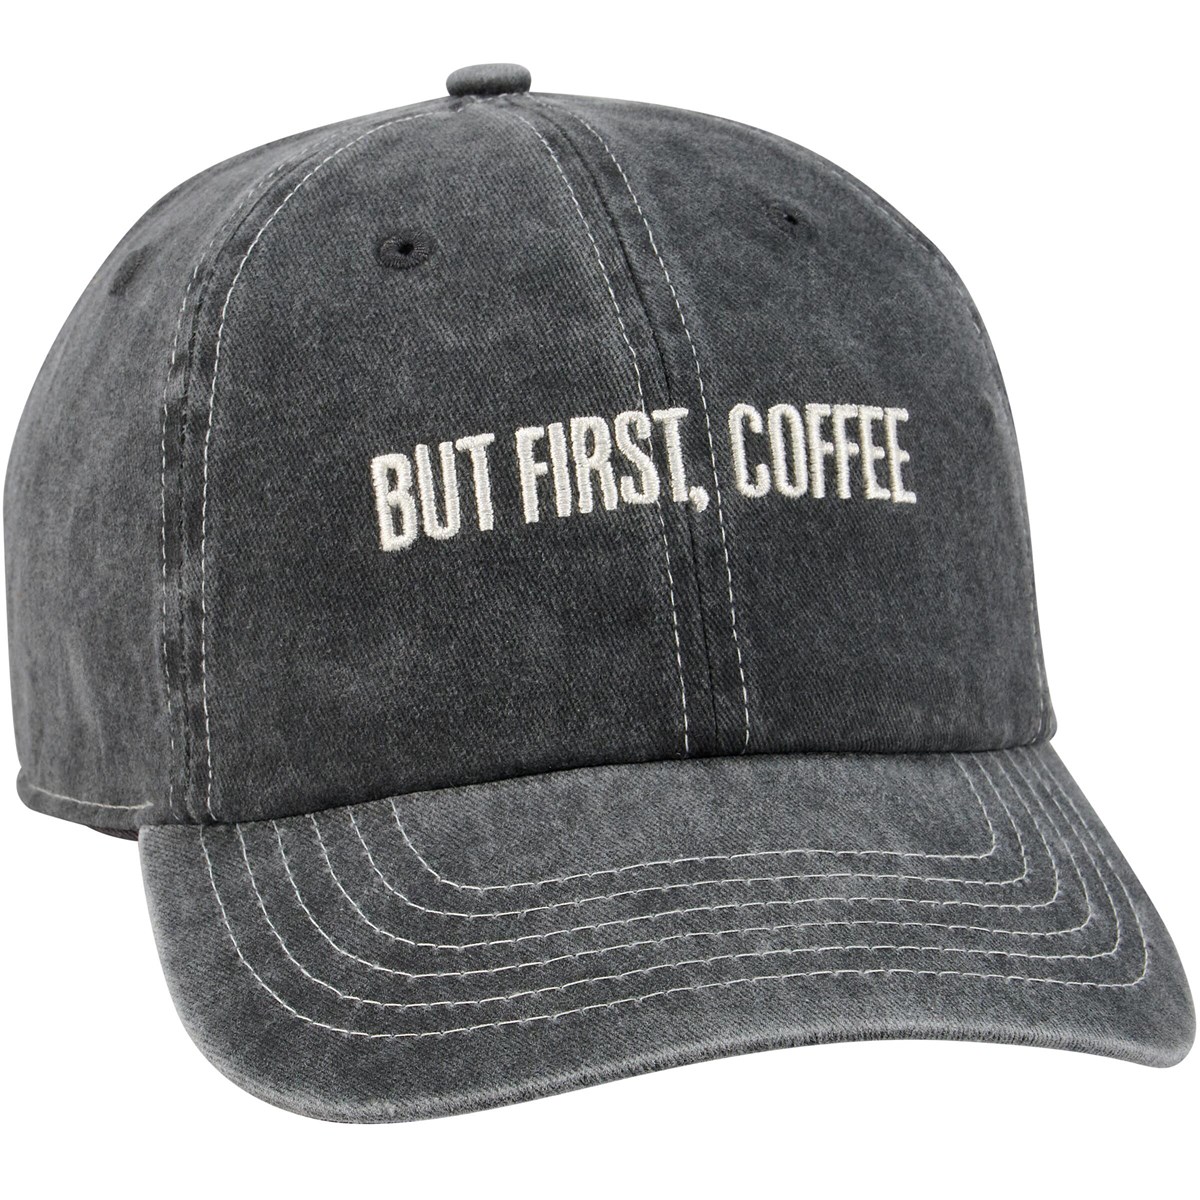 But First Coffee Baseball Cap - Cotton, Metal